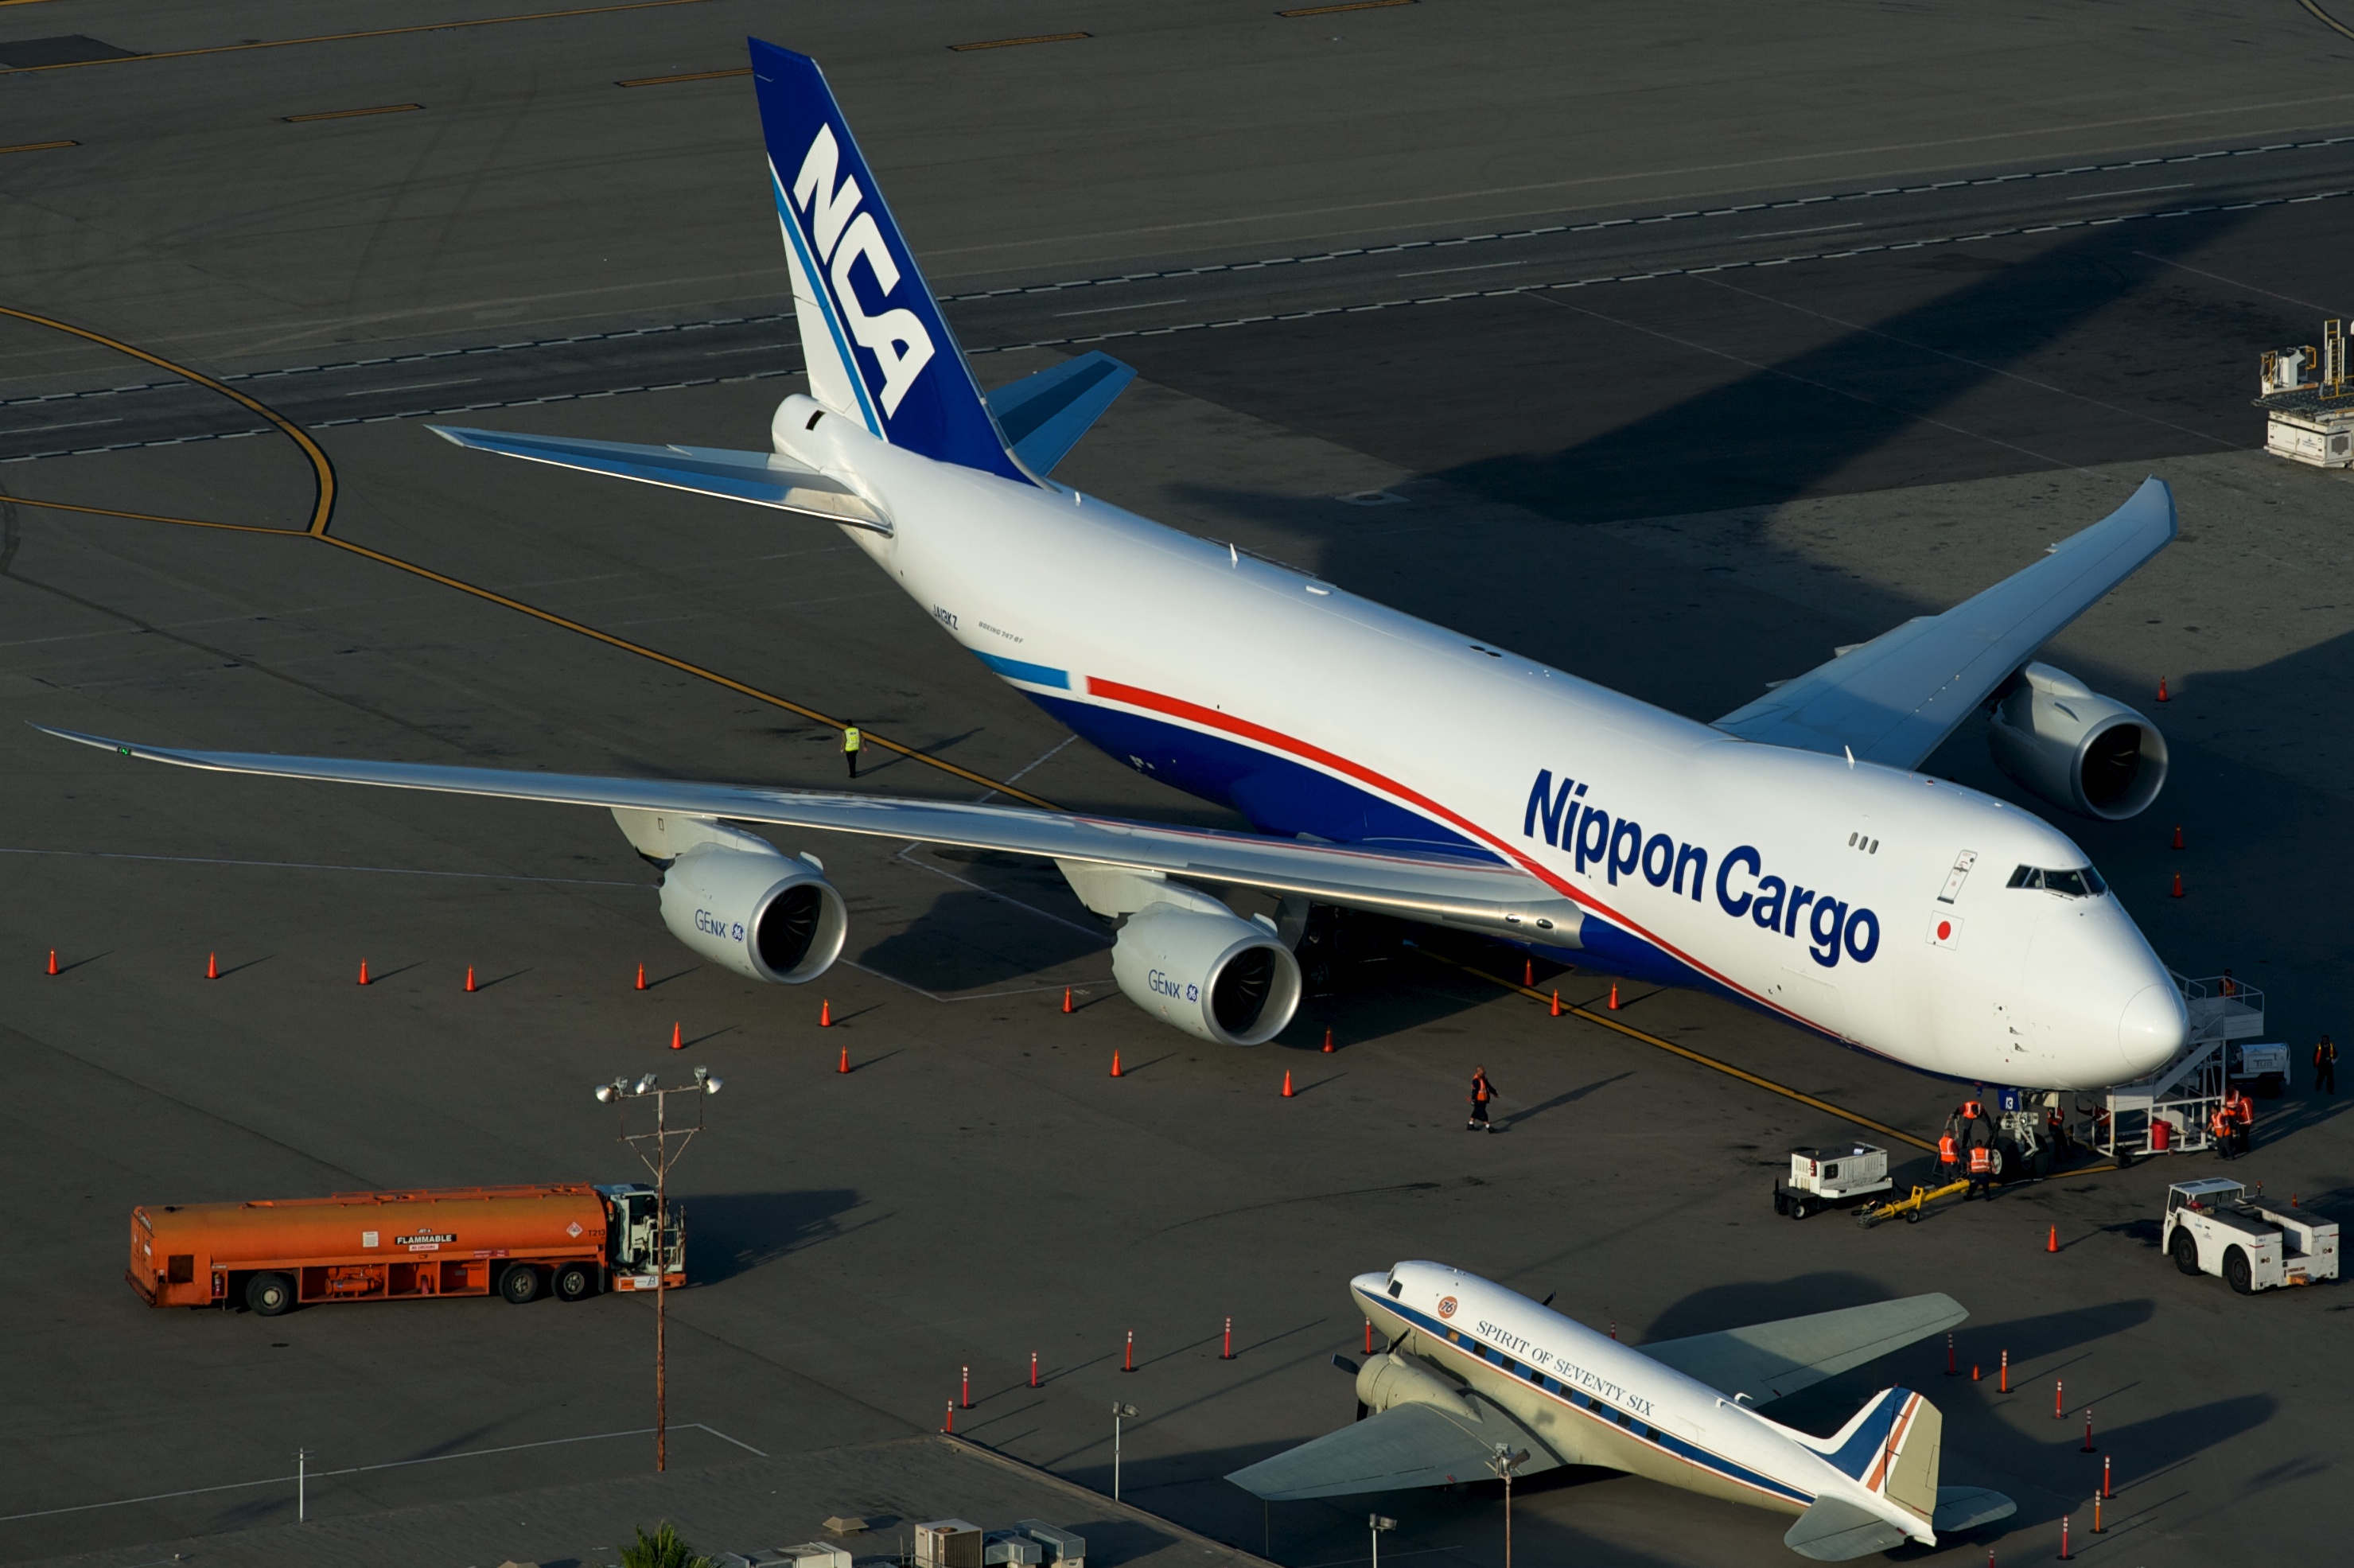 NCA  BOEING 747-8F